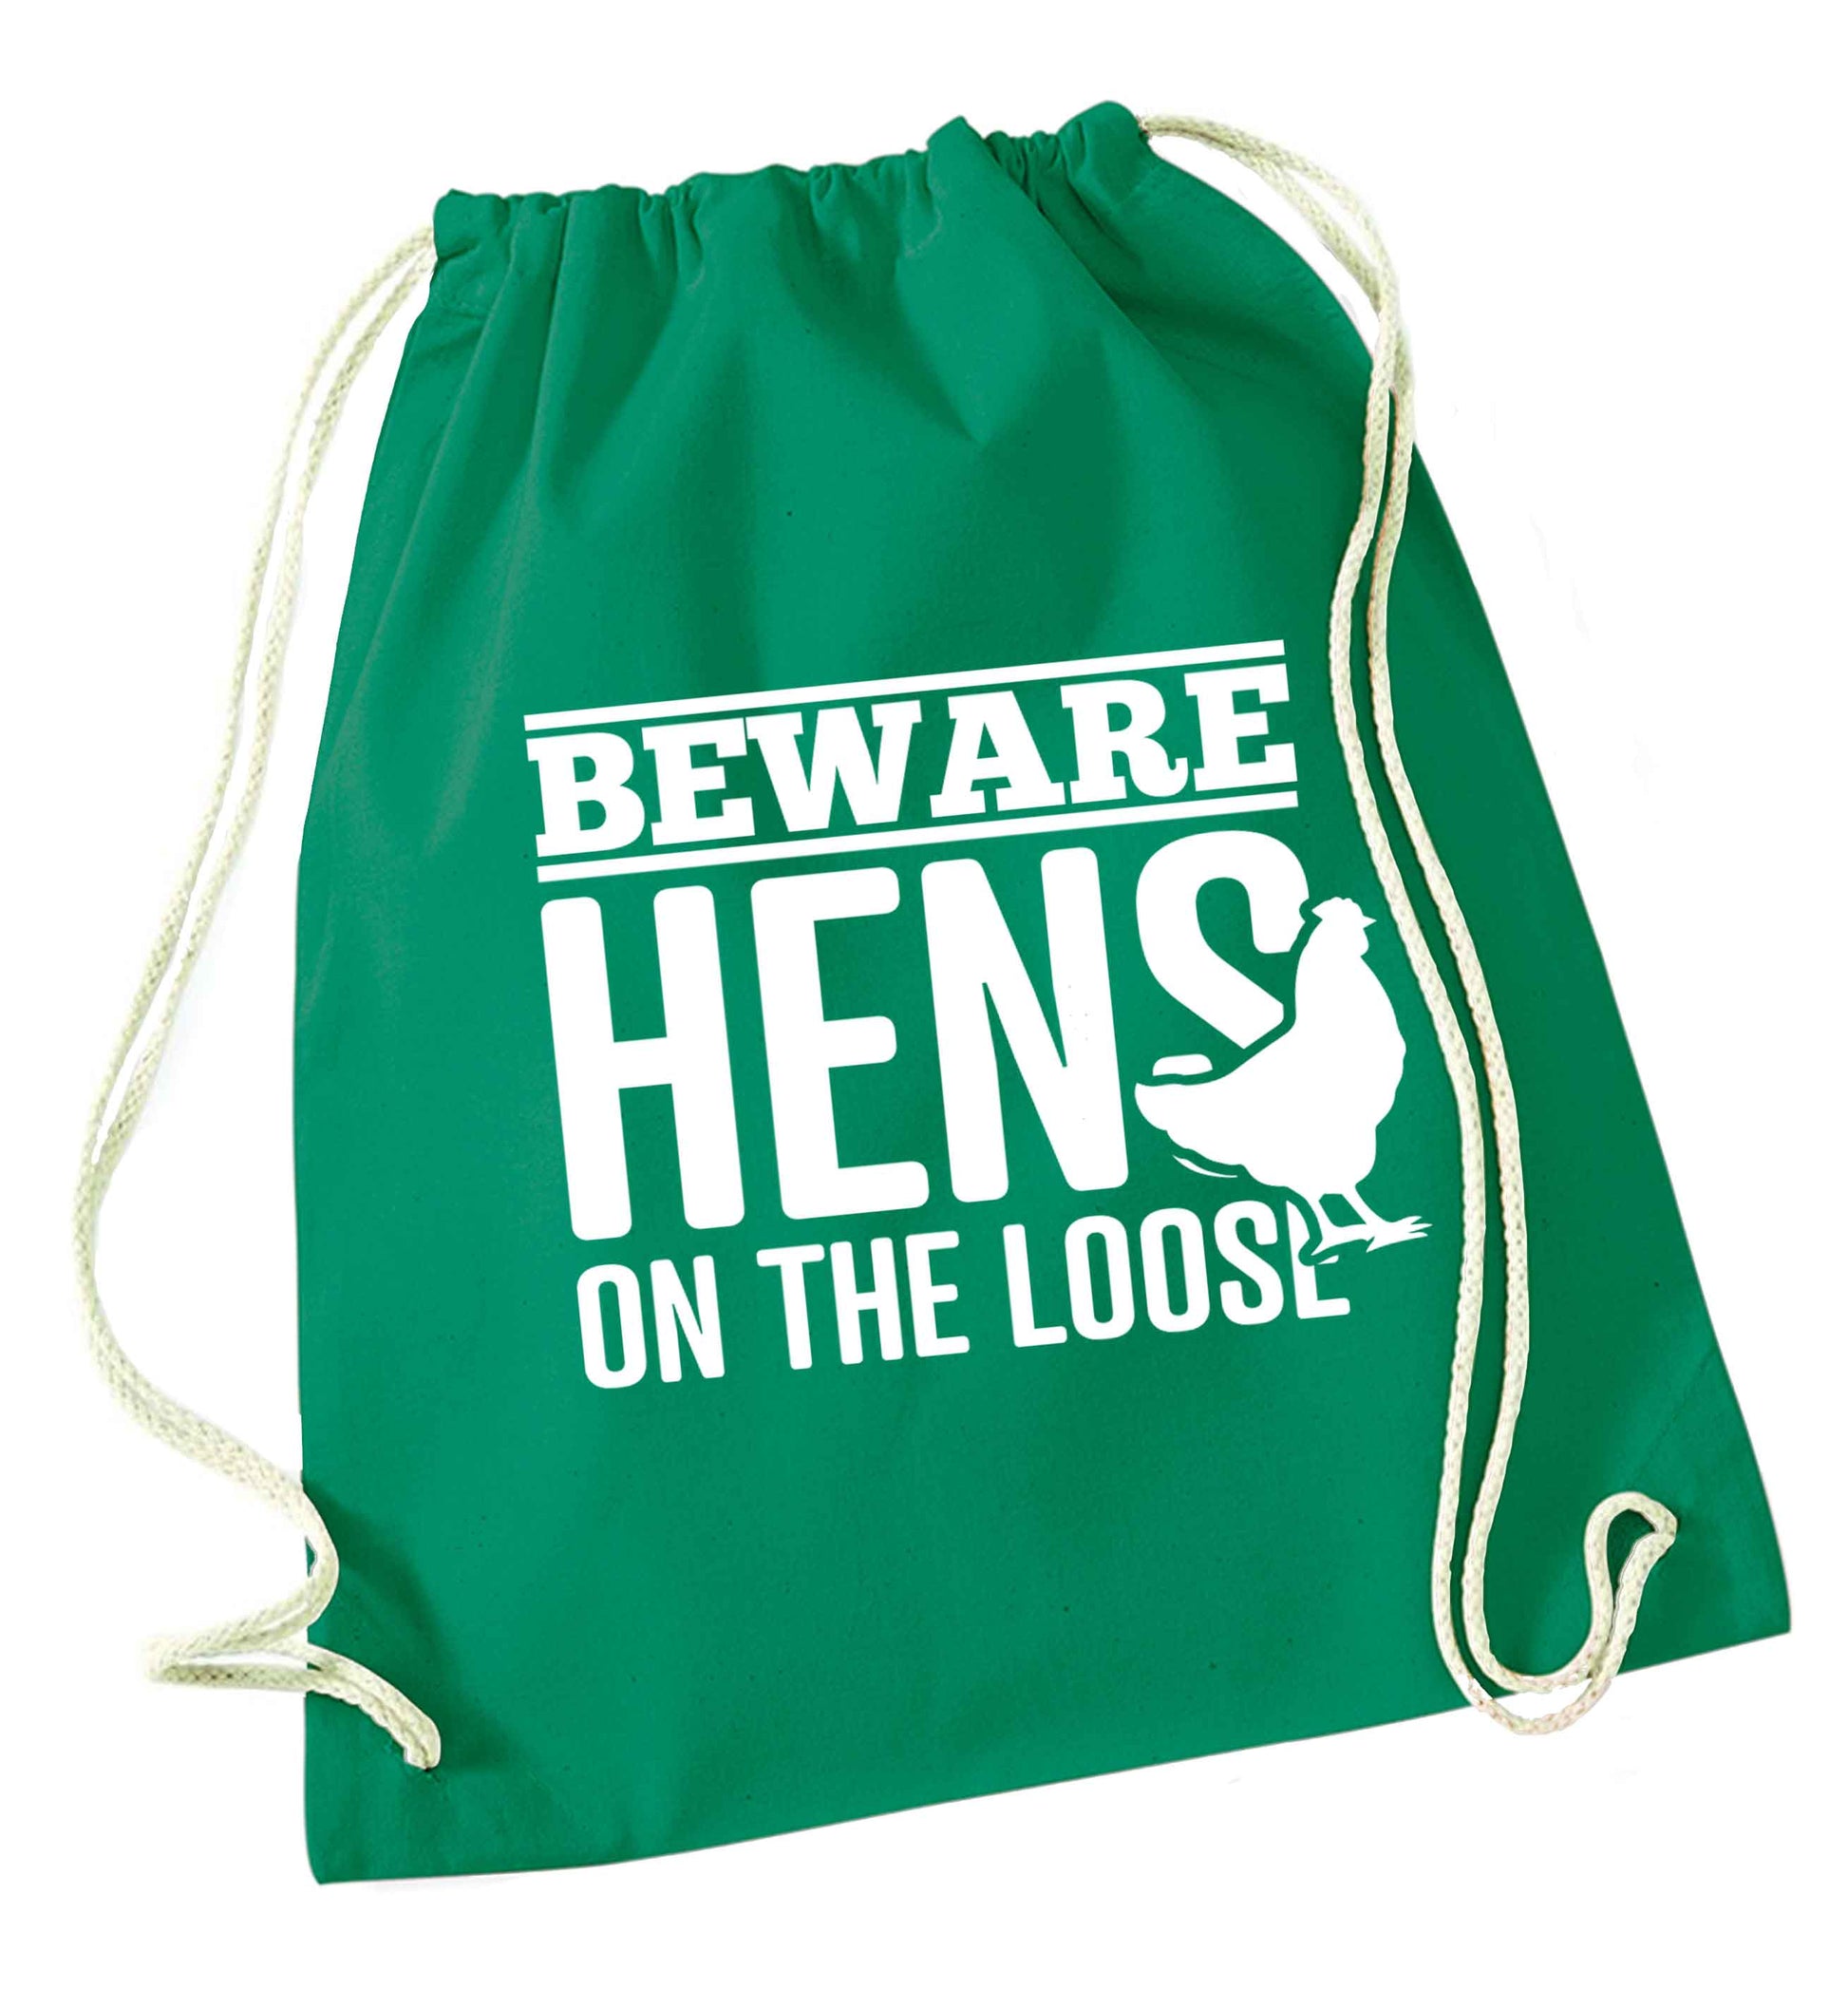 Beware hens on the loose green drawstring bag